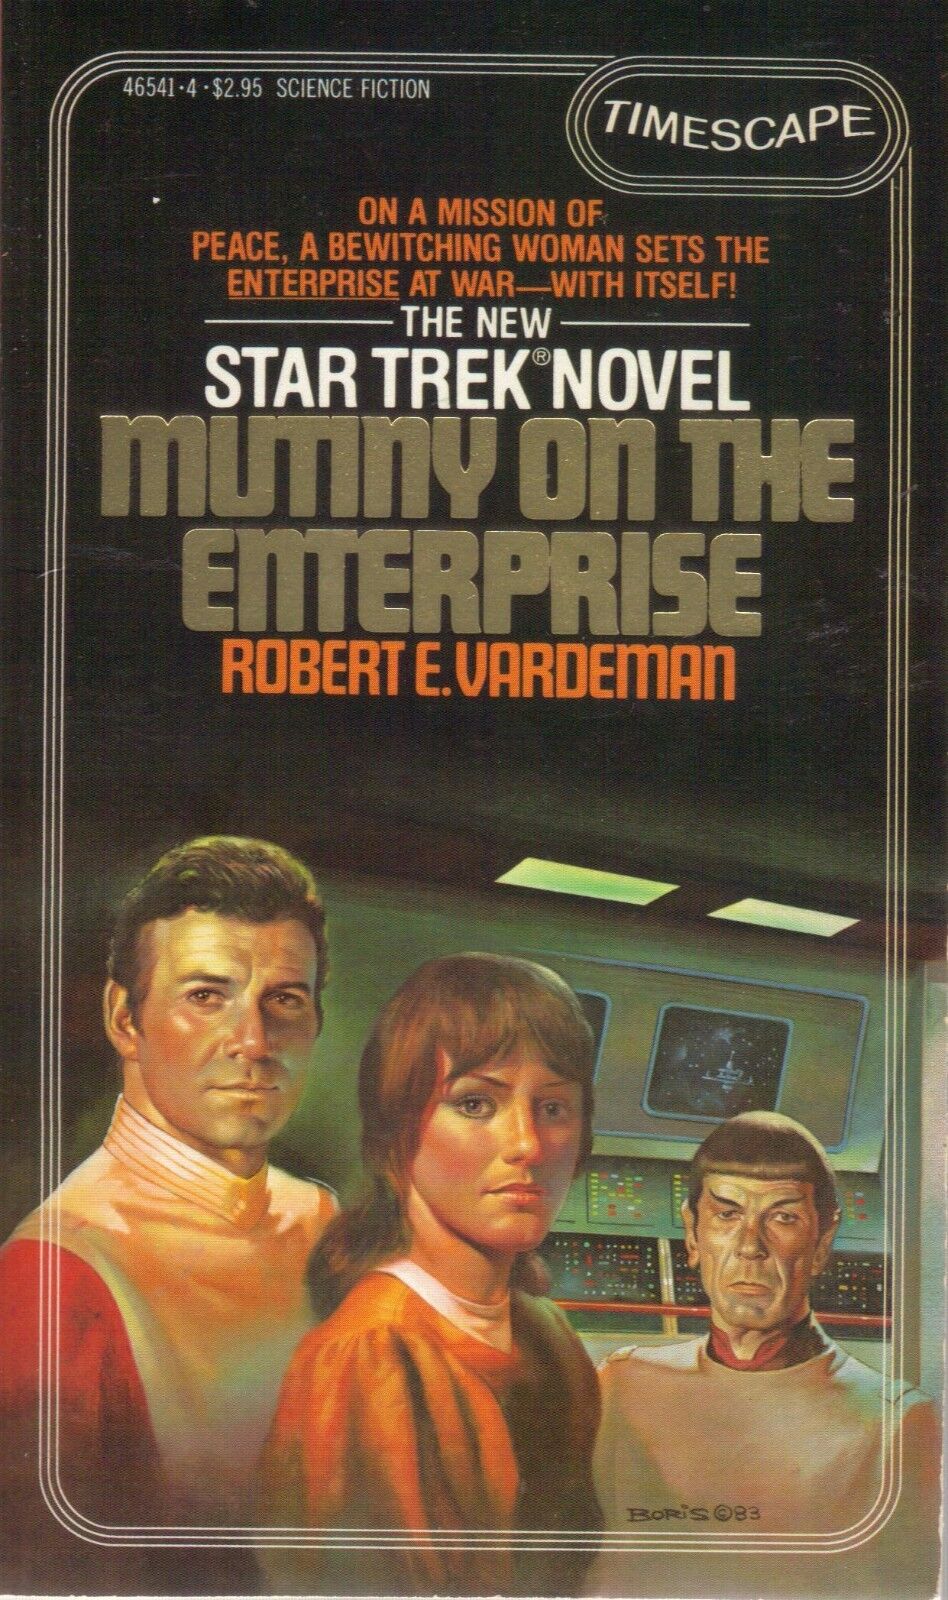 STAR TREK No.12  Mutiny on the Enterprise by R Vardeman 1983 TIMESCAPE paperback